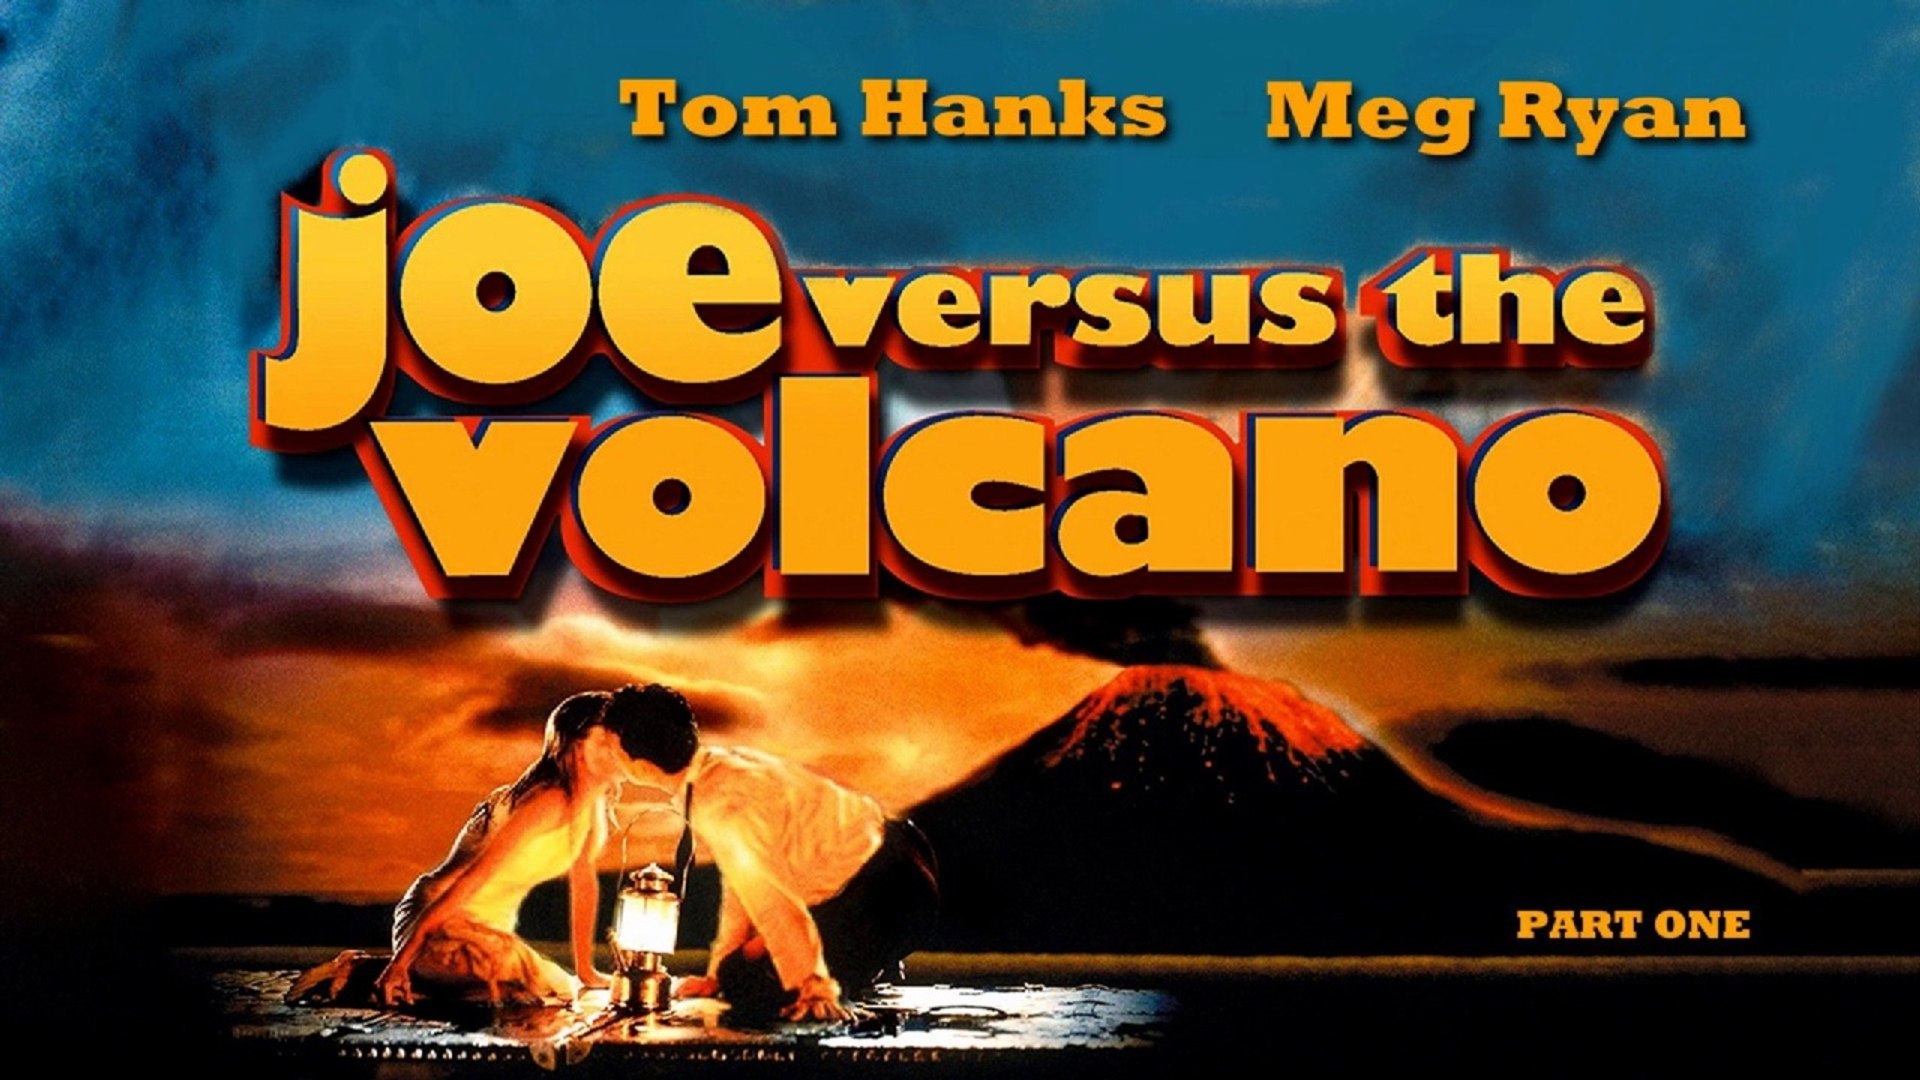 Joe versus the Volcano - Trailers From Hell